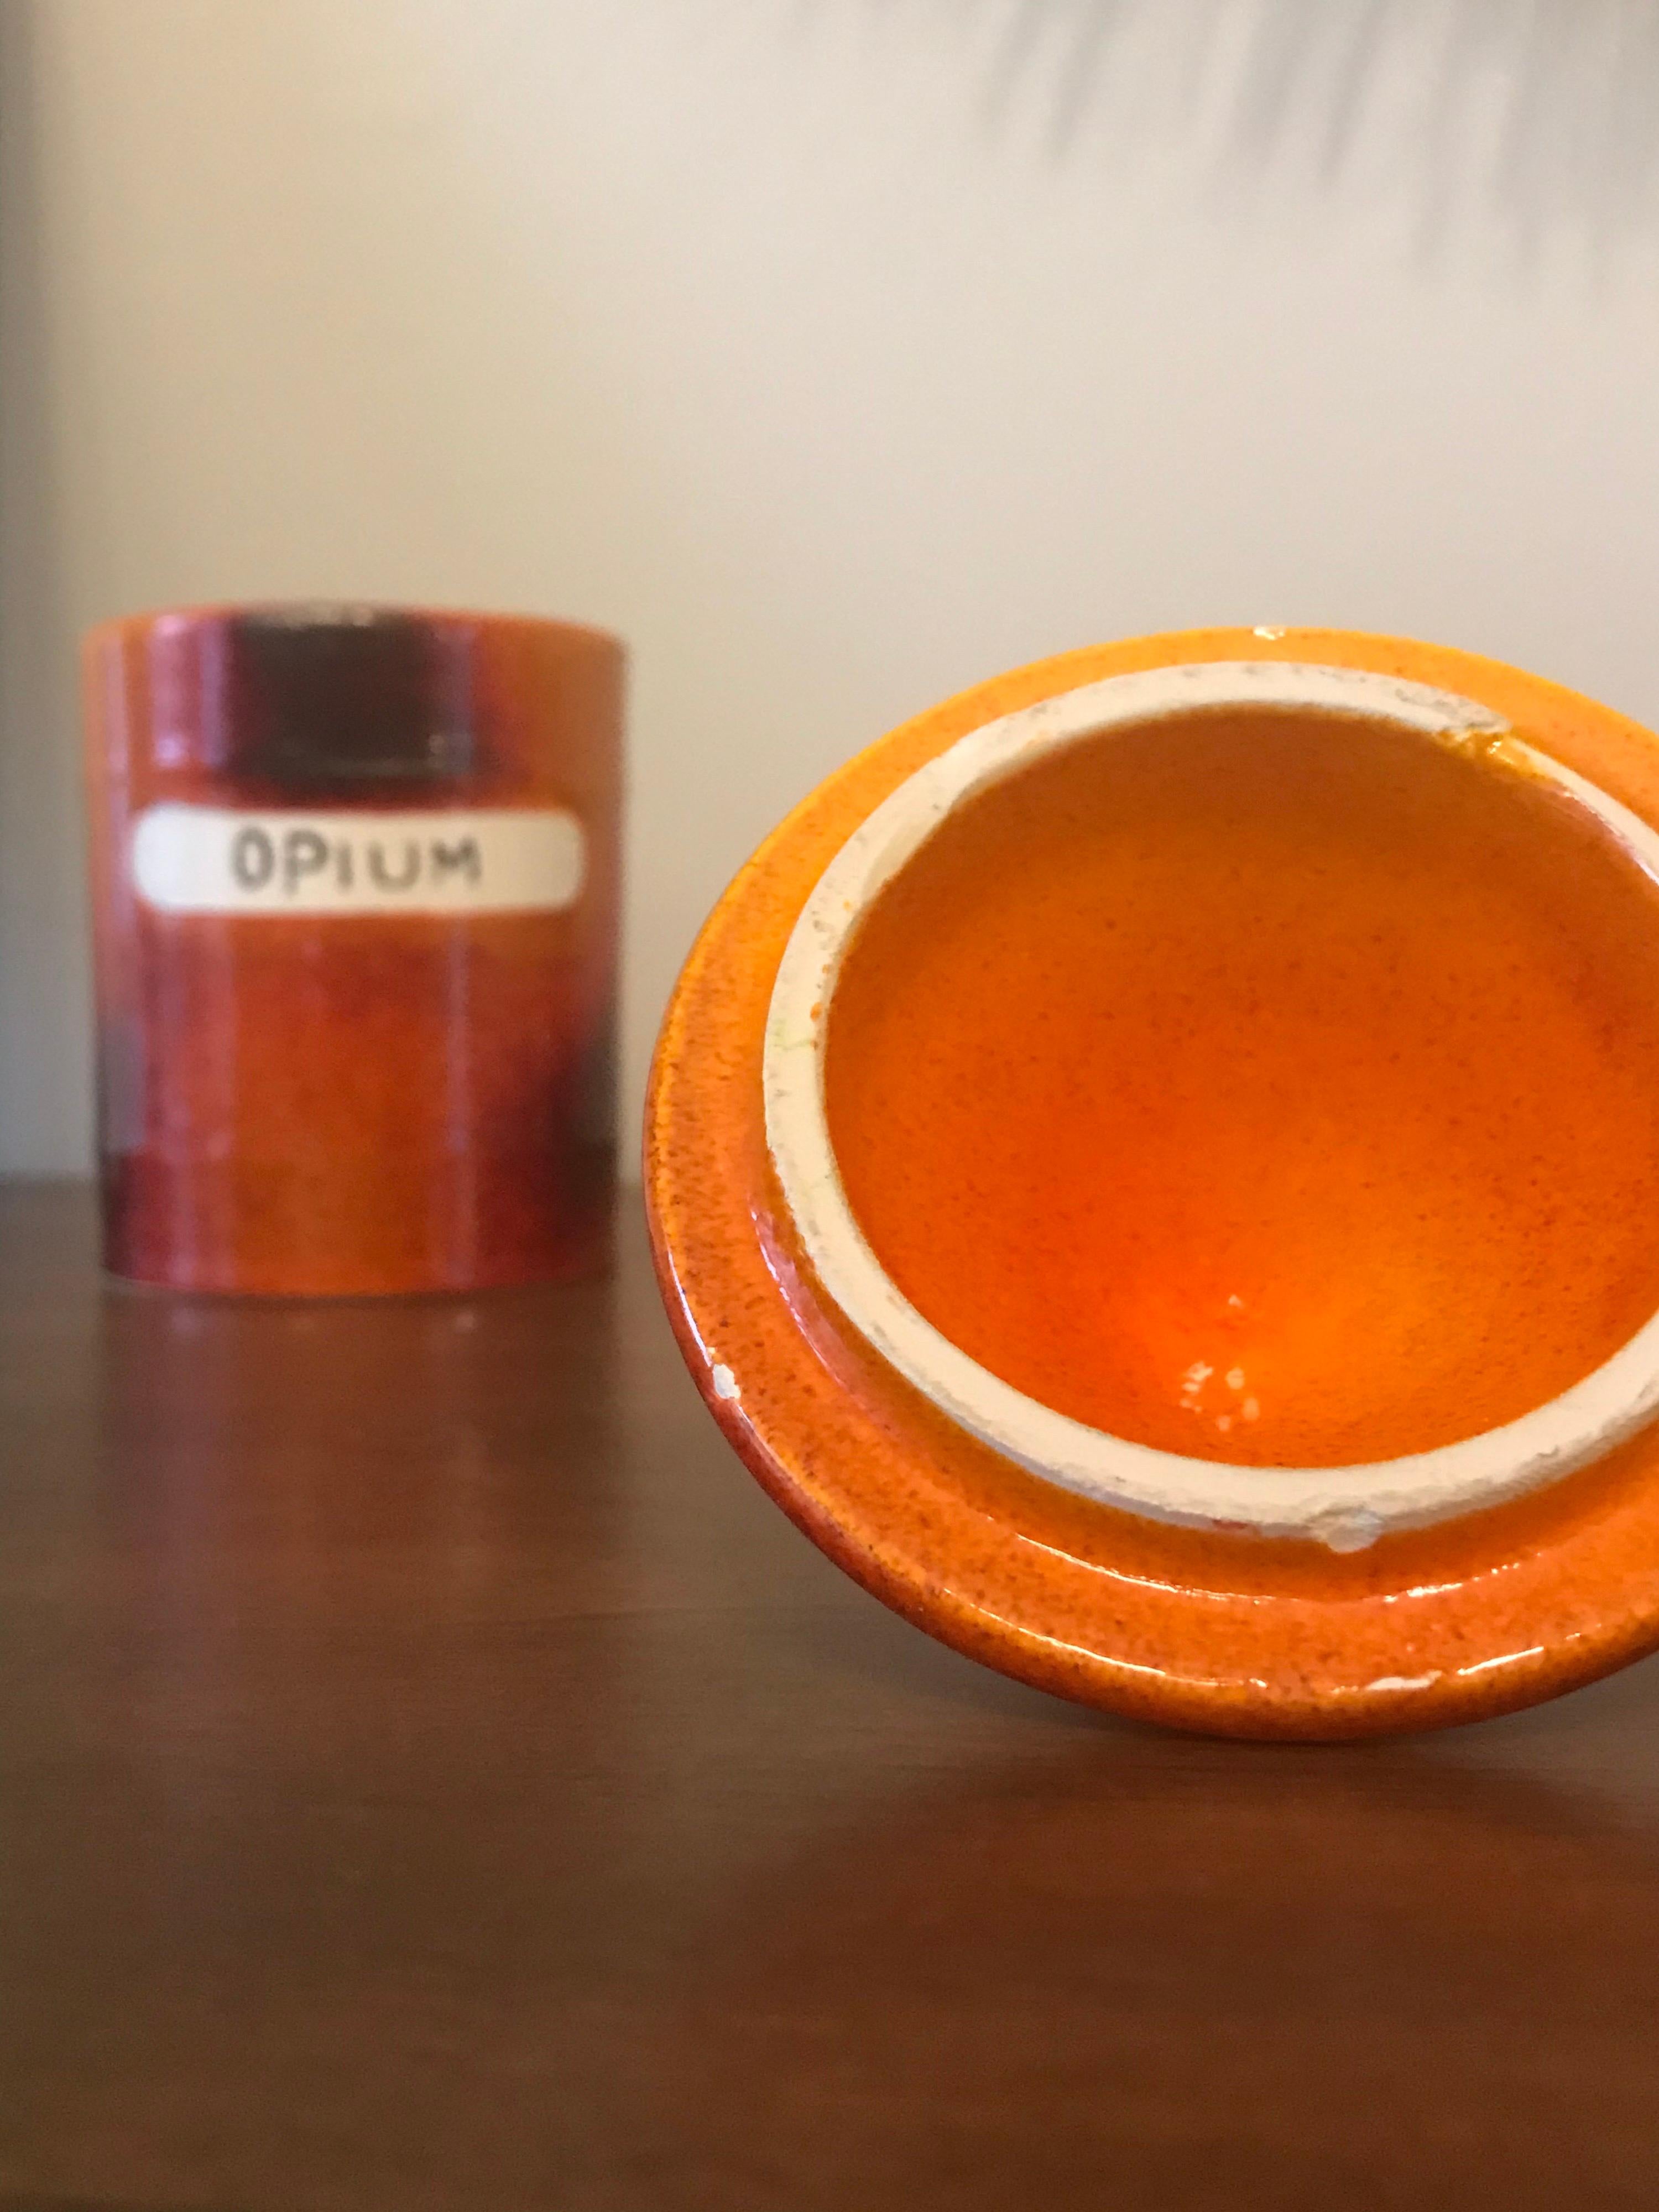 Ceramic Opium Dope/ Vice Jar by Alvino Bagni for Raymor